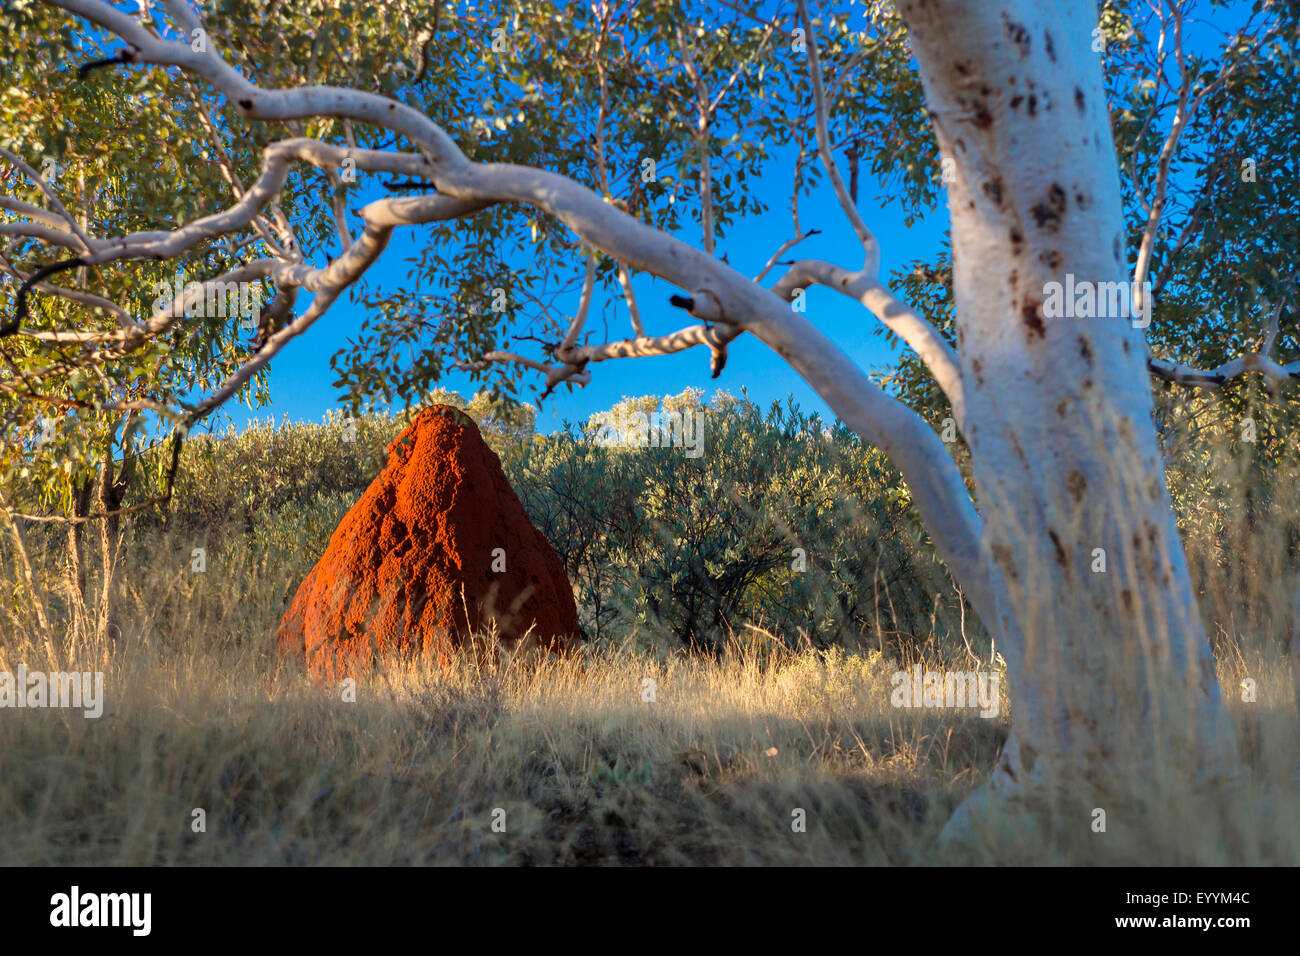 termite hill at the Australien outback, Australia, Western Australia, Karijini National Park Stock Photo